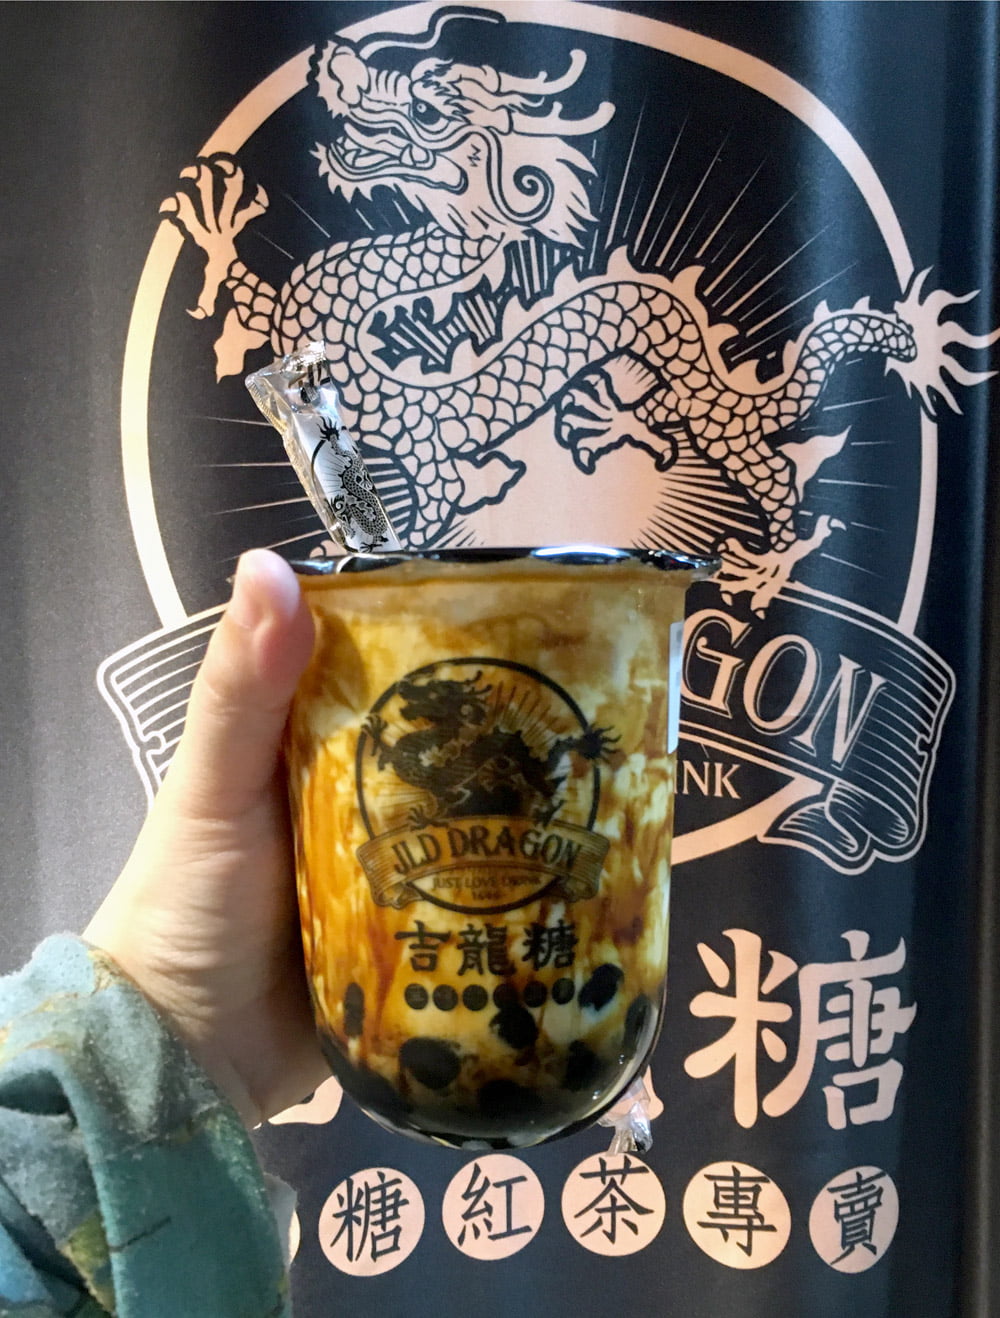 Taipei JLD Dragon Bubble Tea